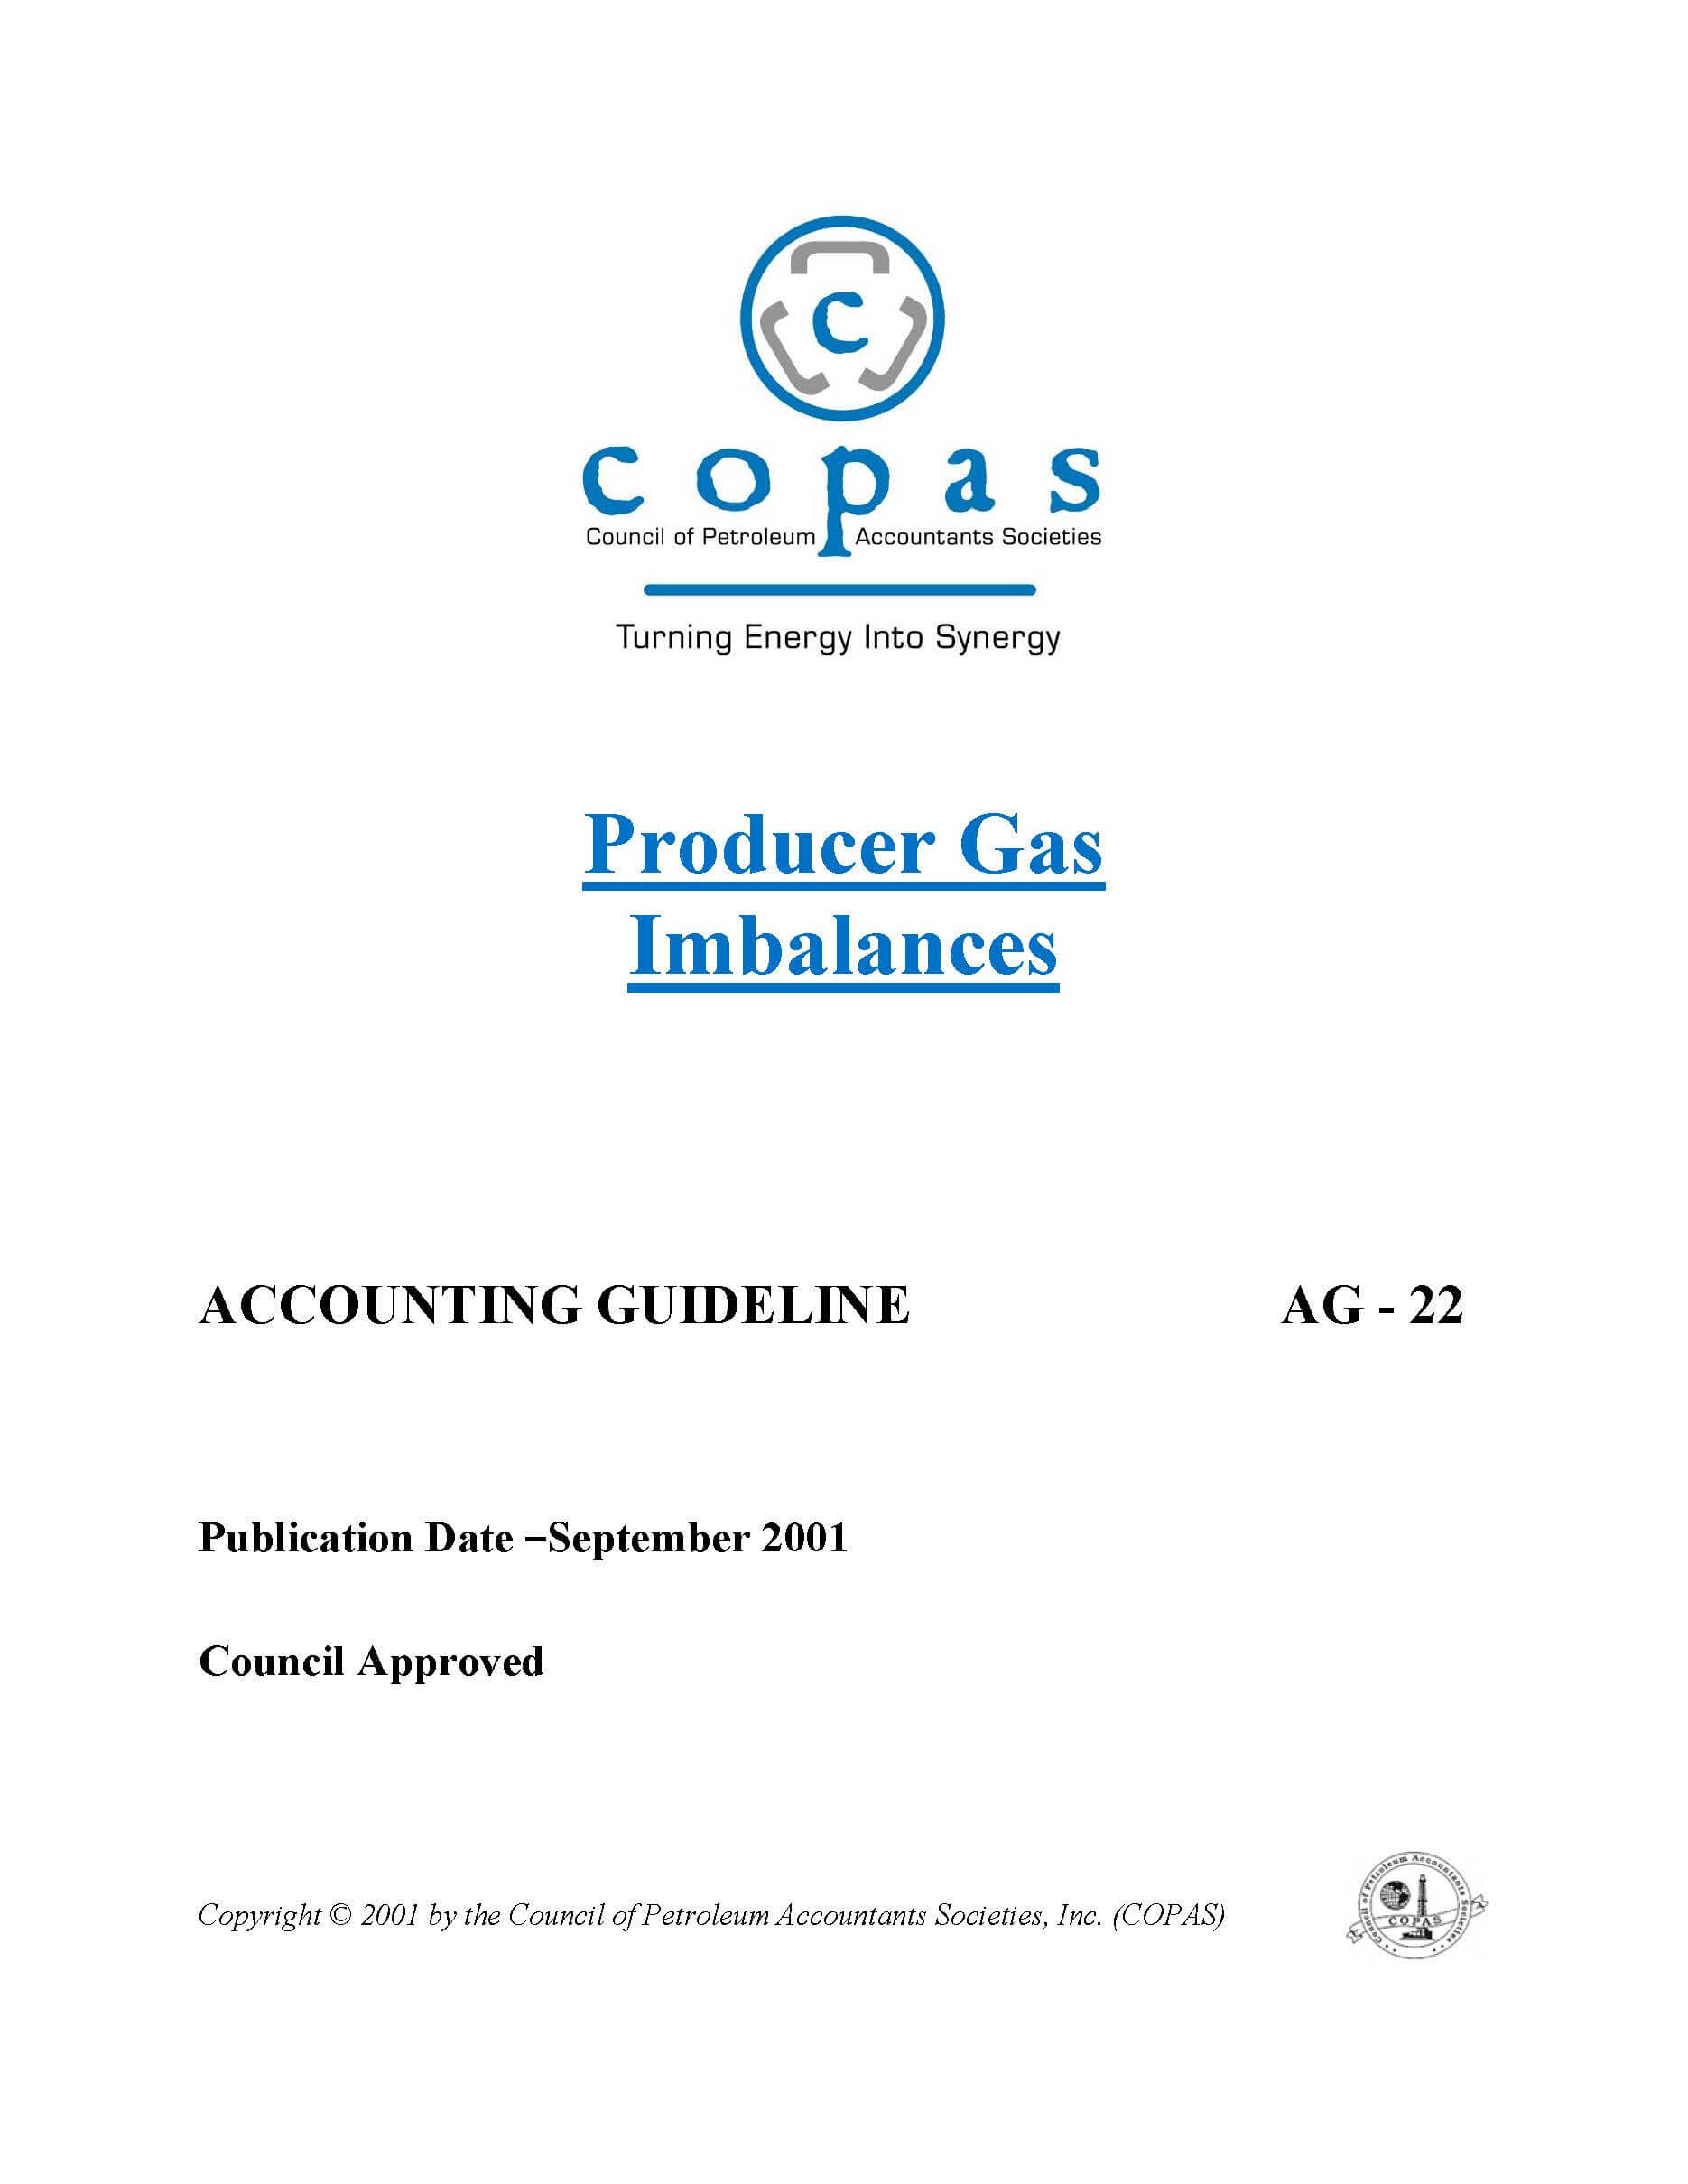 AG-22 Producer Gas Imbalances - products AG 22 Producer Gas Imbalances - Council of Petroleum Accountants Societies